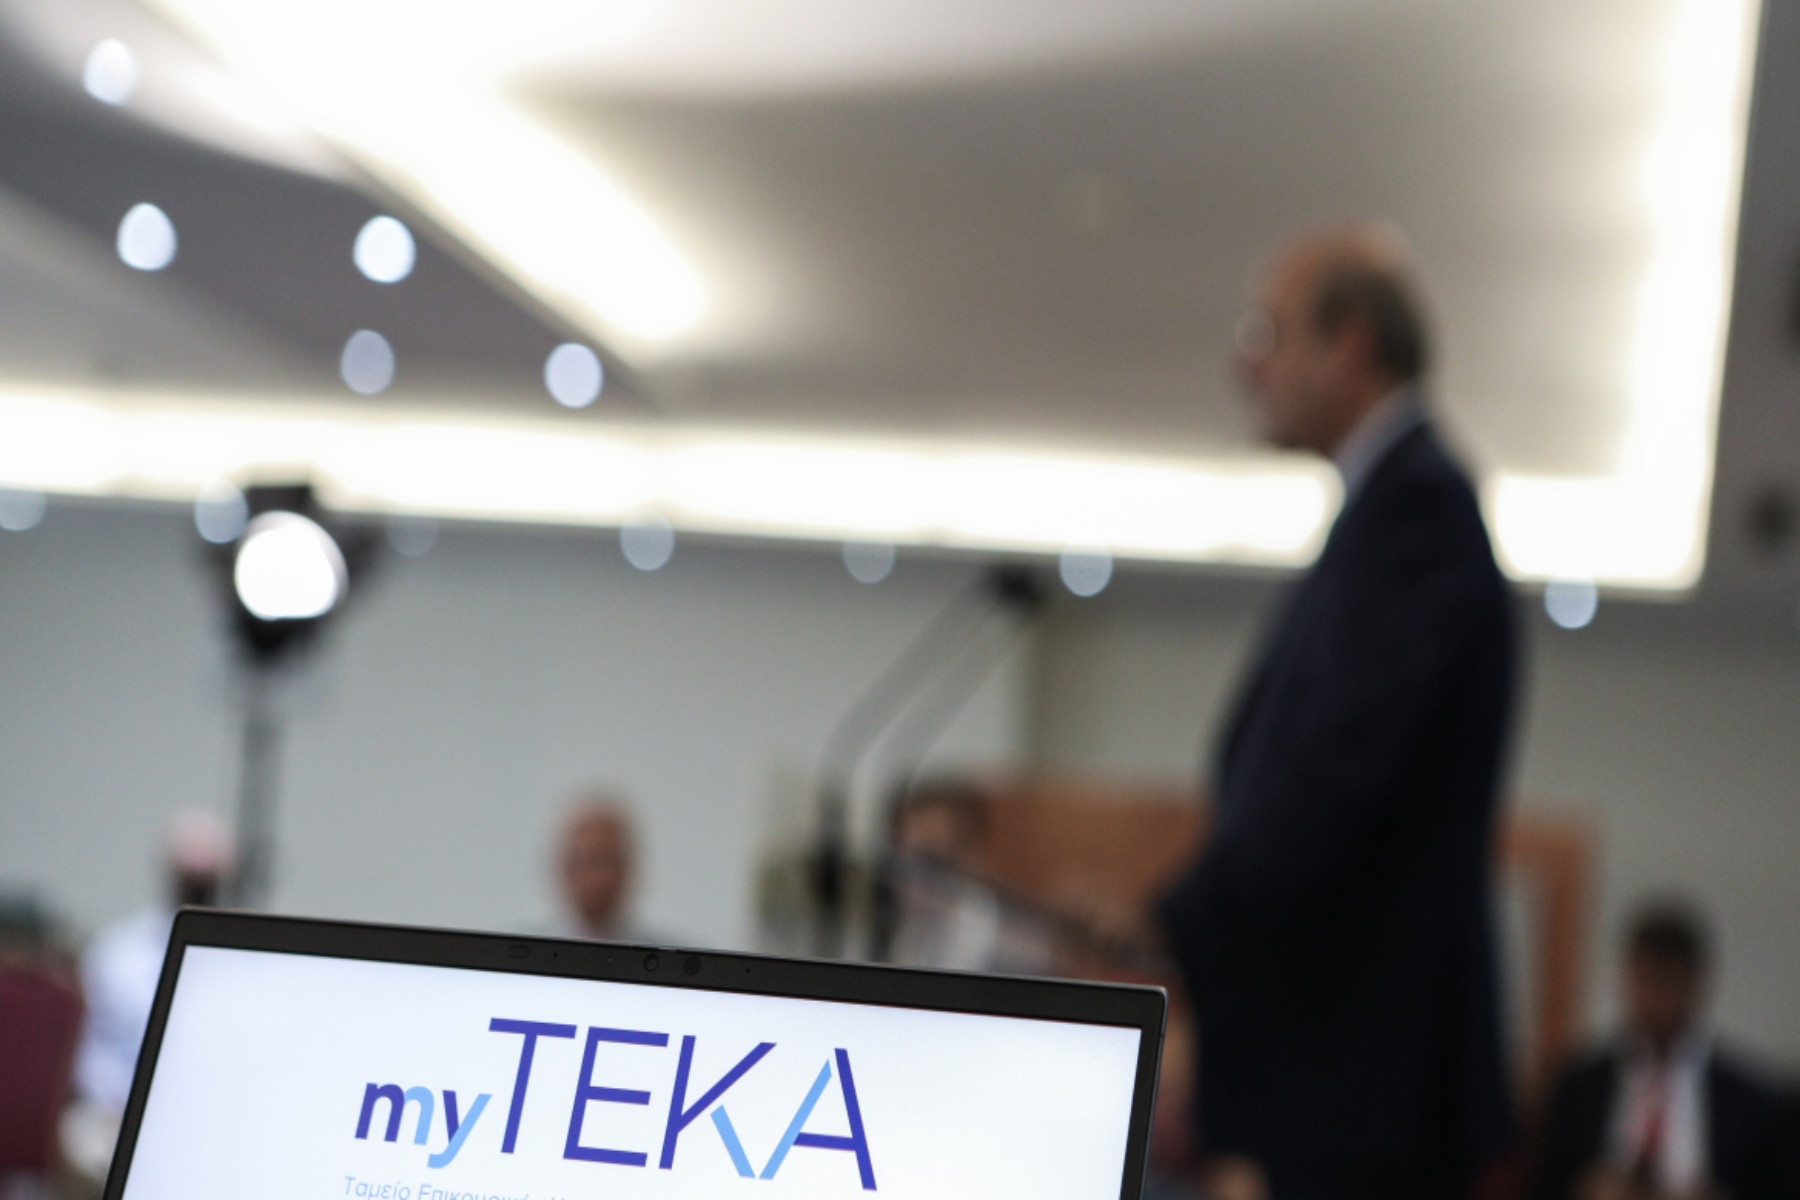 be.teka.gov.gr: Άνοιξε η πλατφόρμα για επικουρική ασφάλιση νέων εργαζομένων